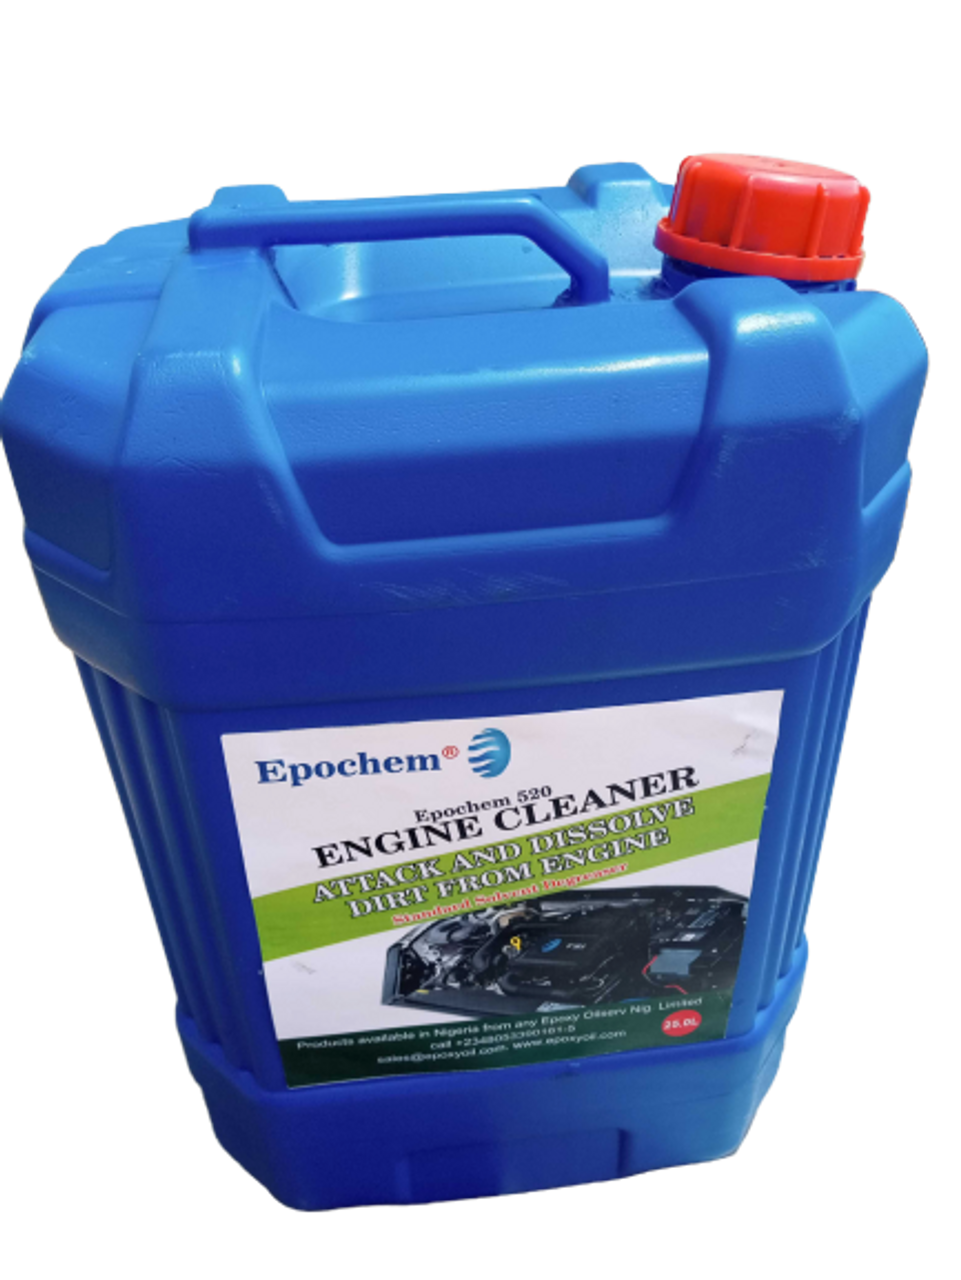 Buy online Engine cleaner Epochem 520 Engine degreaser 20 liters